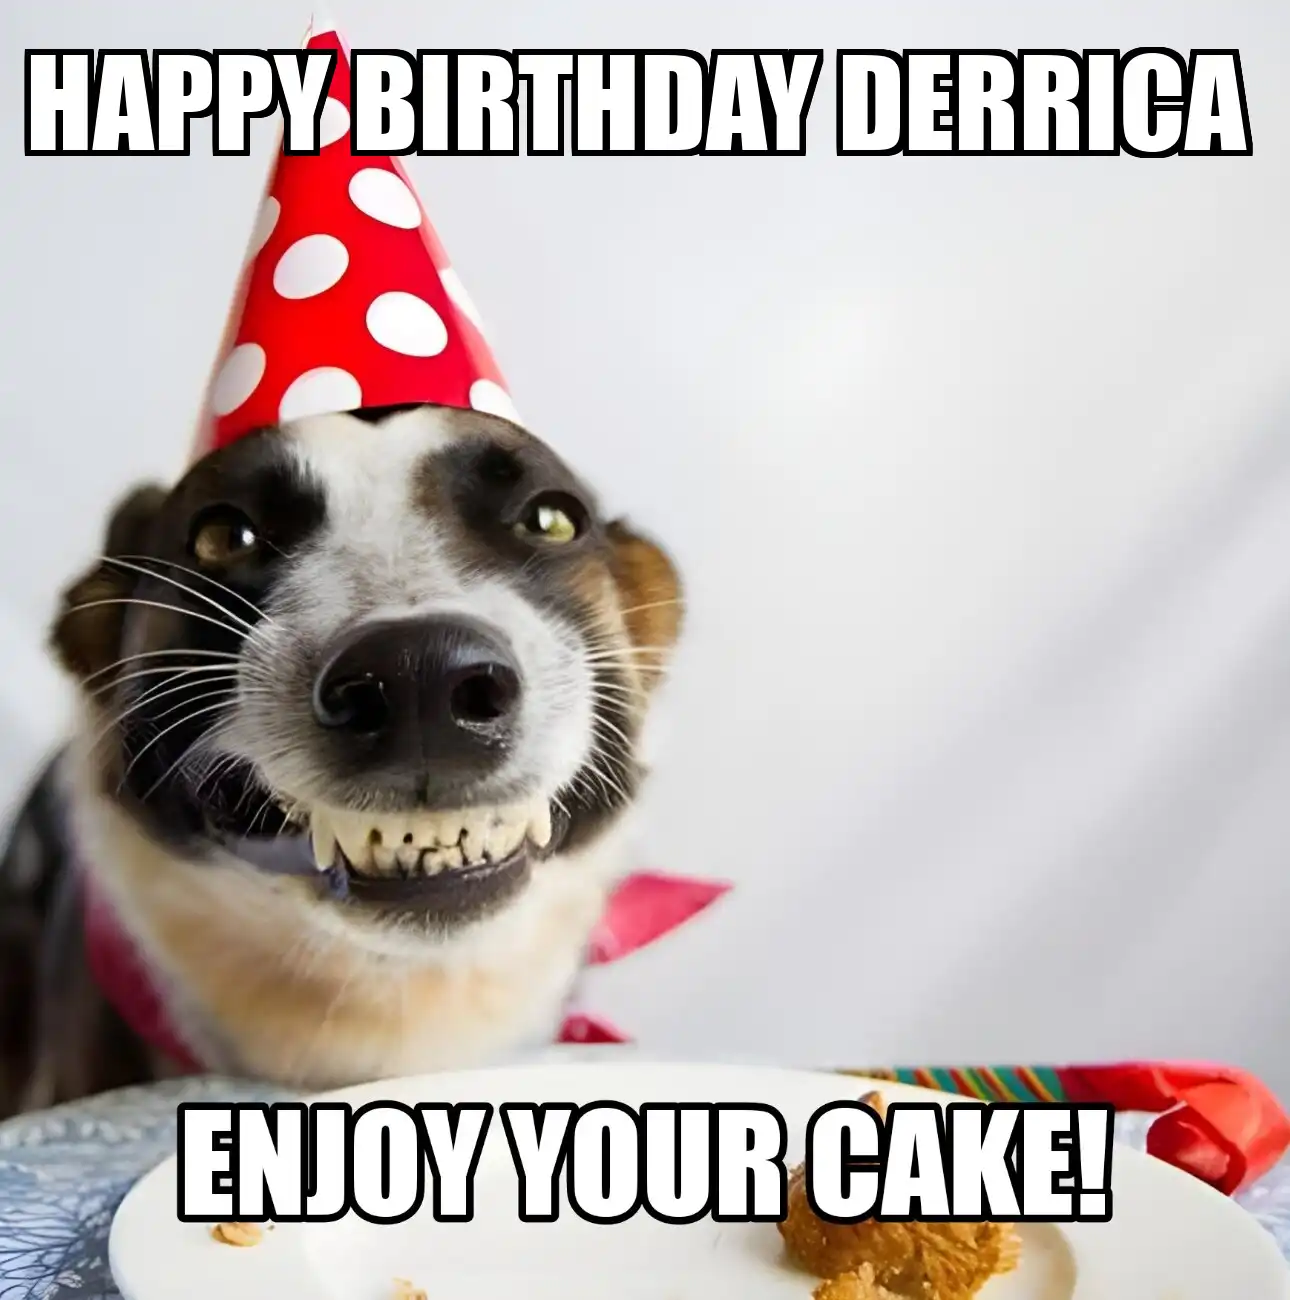 Happy Birthday Derrica Enjoy Your Cake Dog Meme